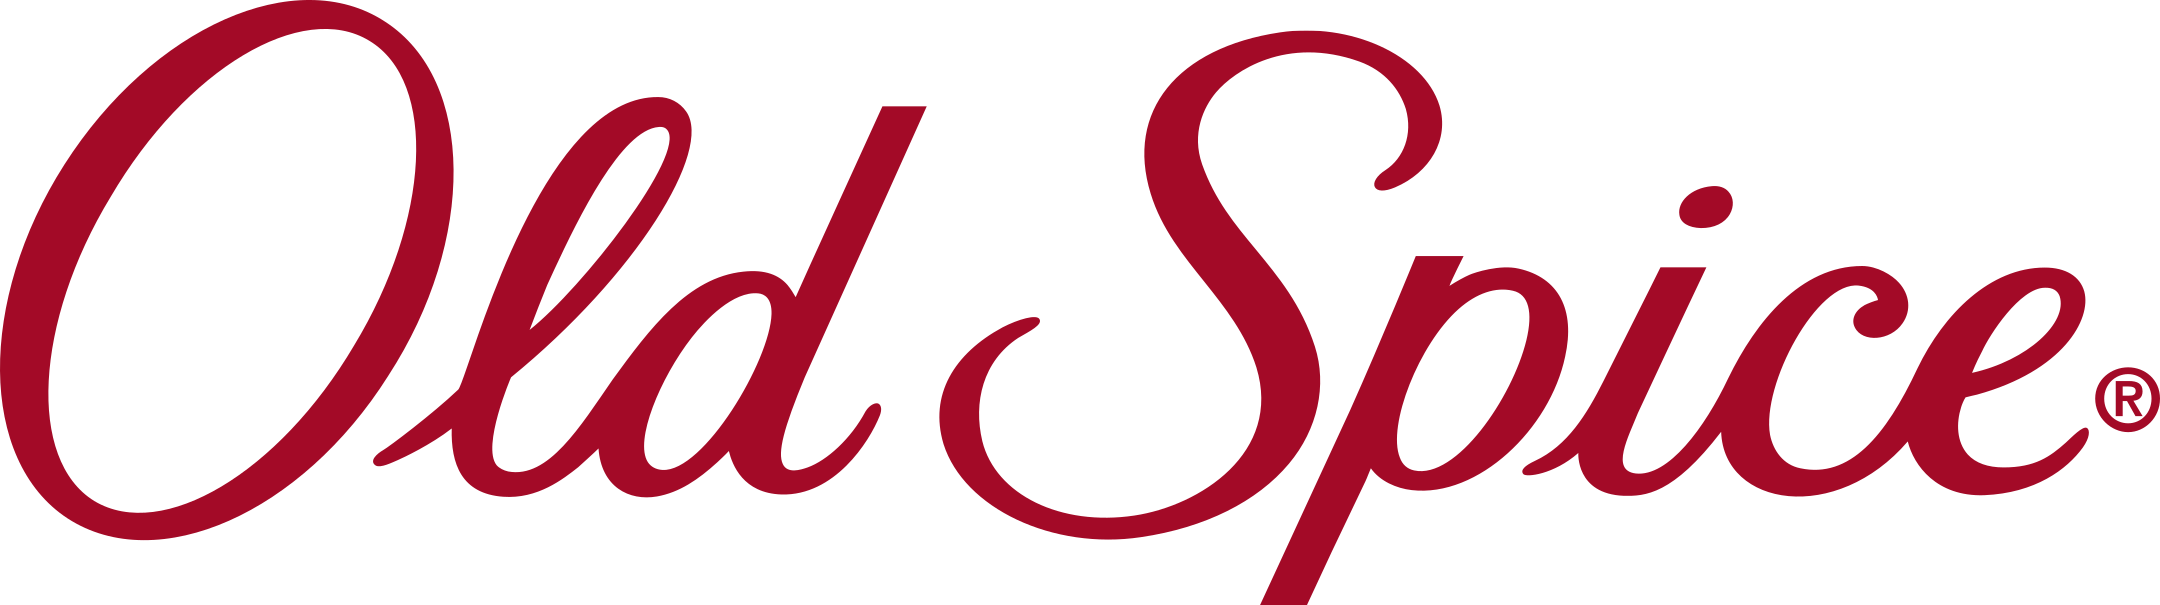 oldspice logo 1 - Old Spice Logo